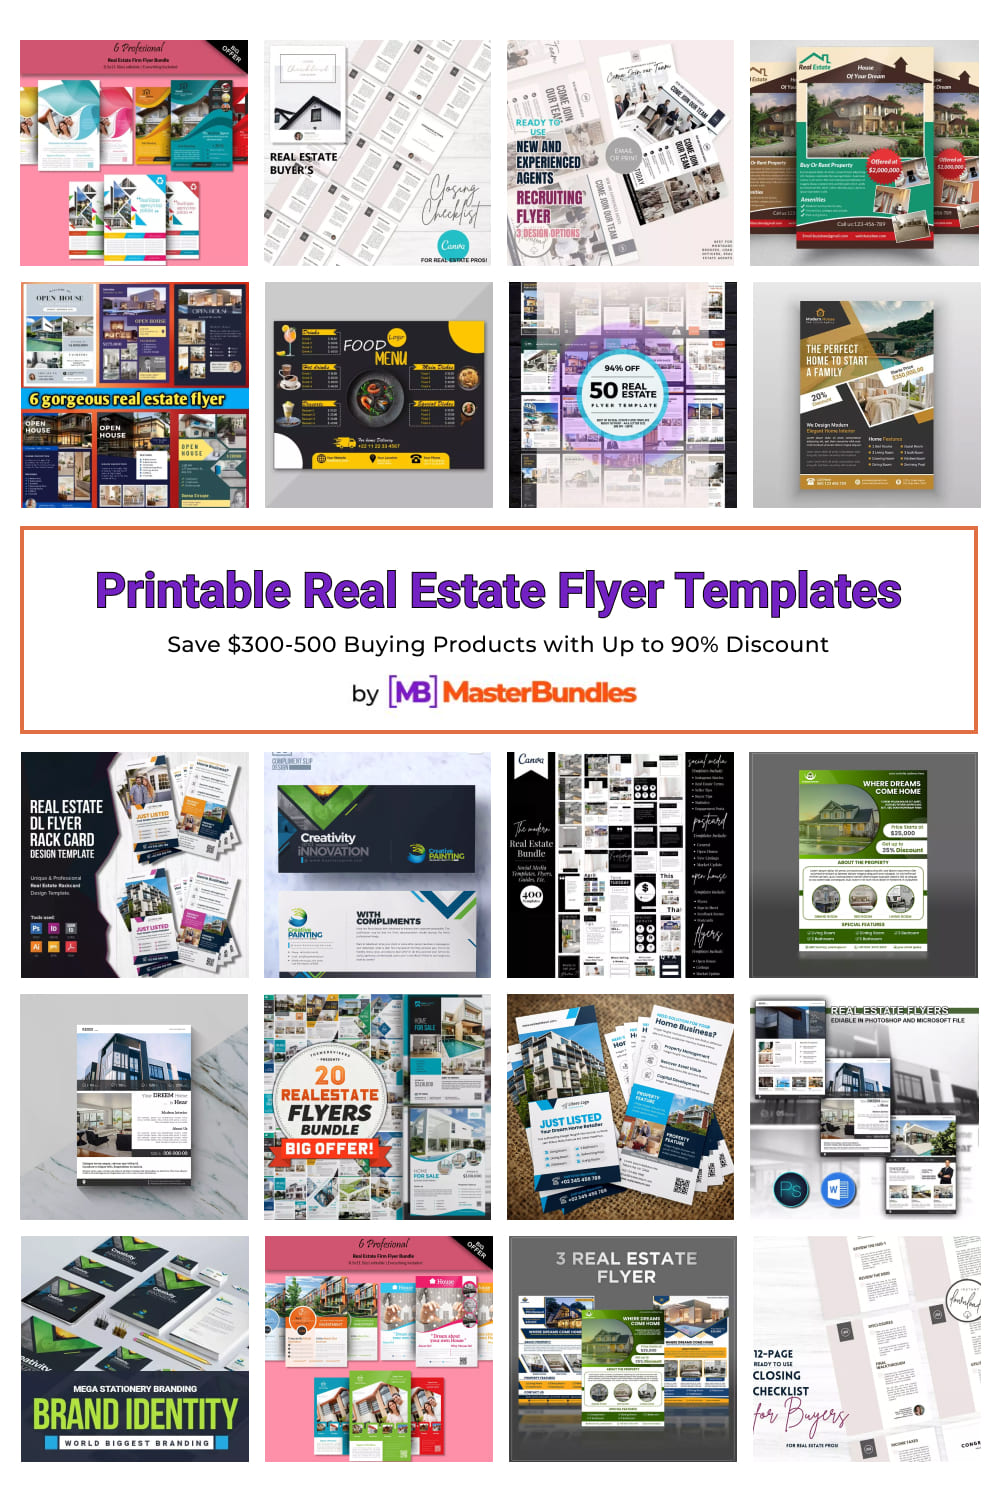 Printable Real Estate Flyer Templates Pinterest image.